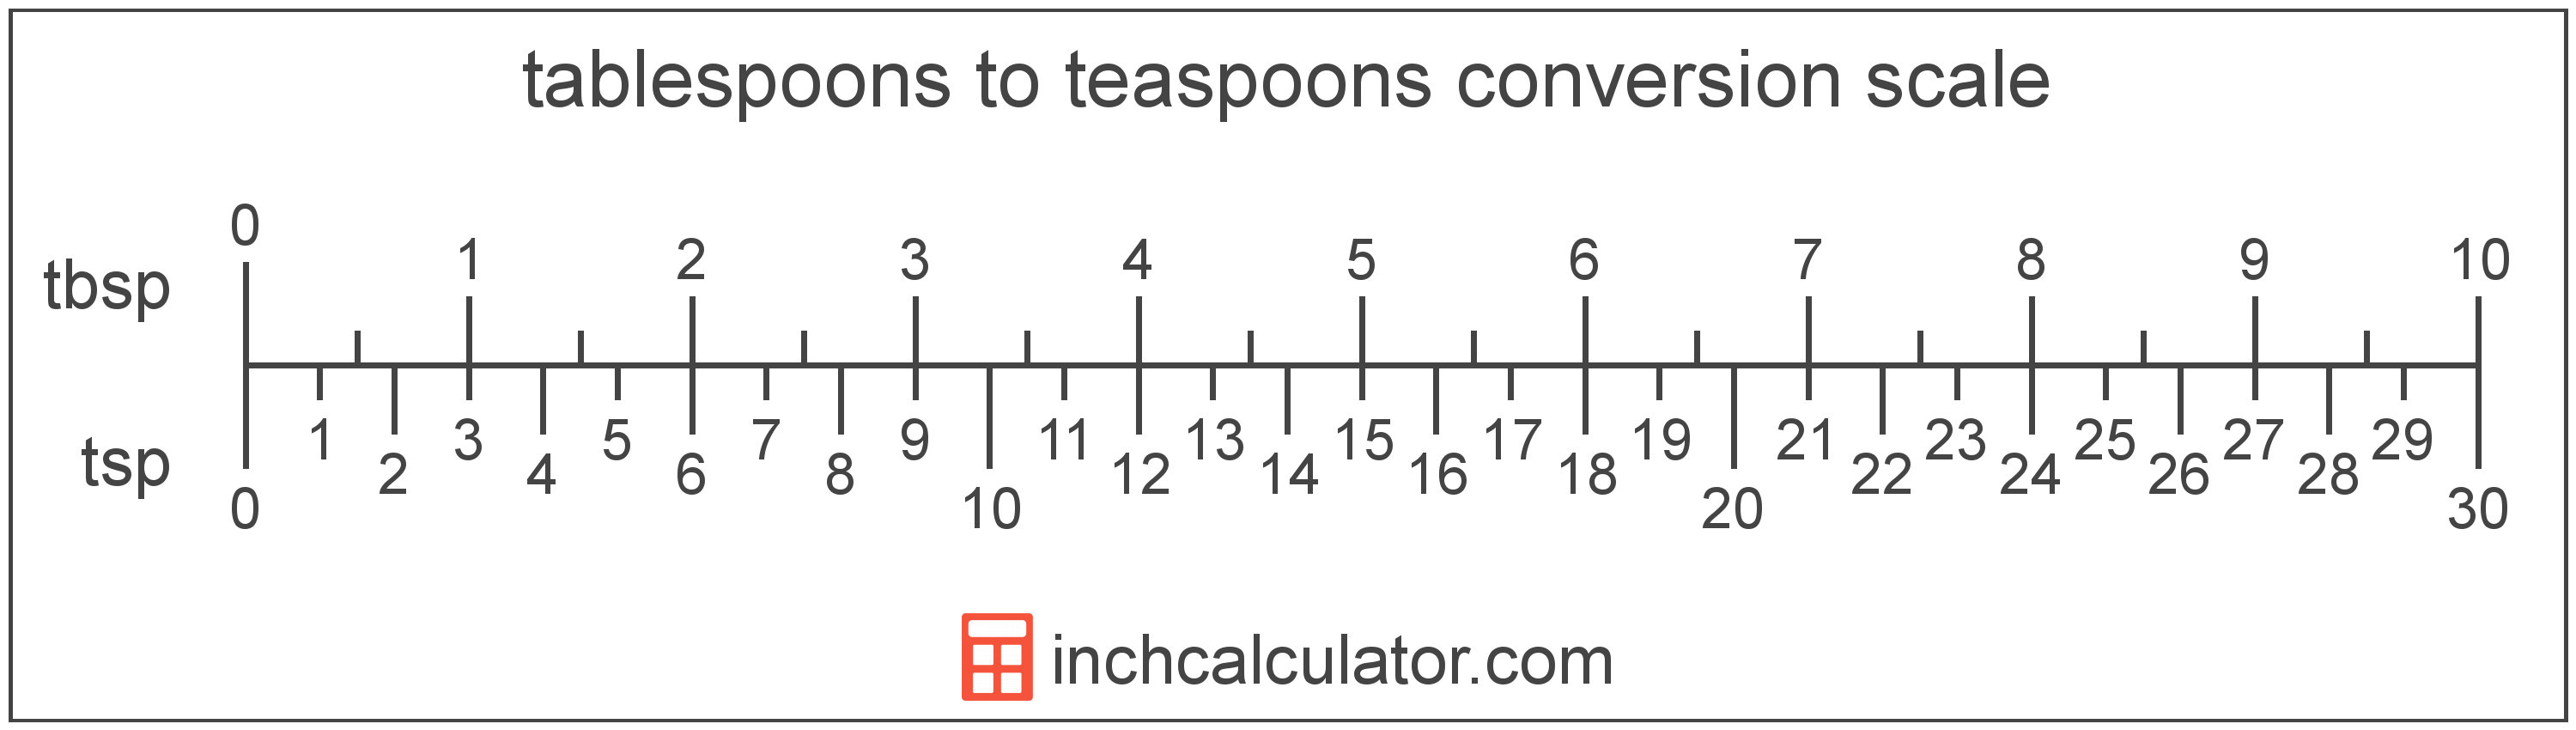 tablespoon to teaspoon-conversion